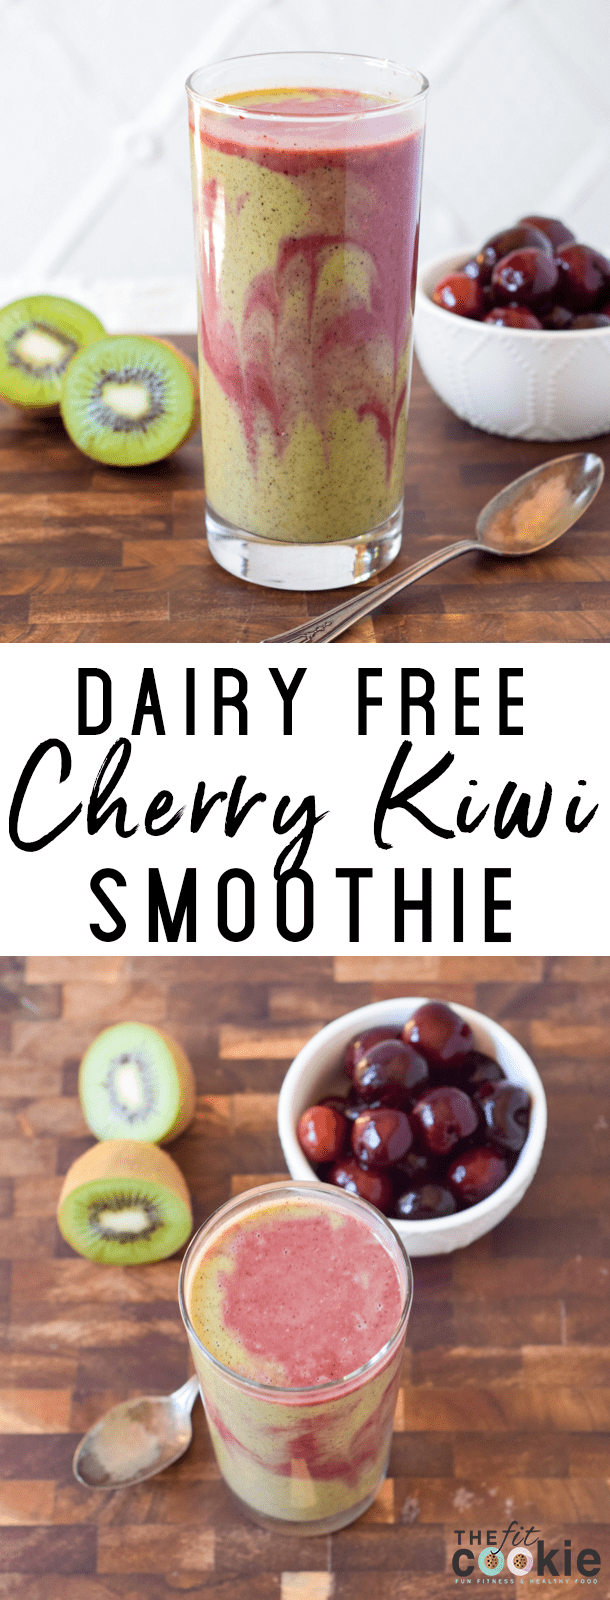 image collage of dairy free cherry kiwi smoothie